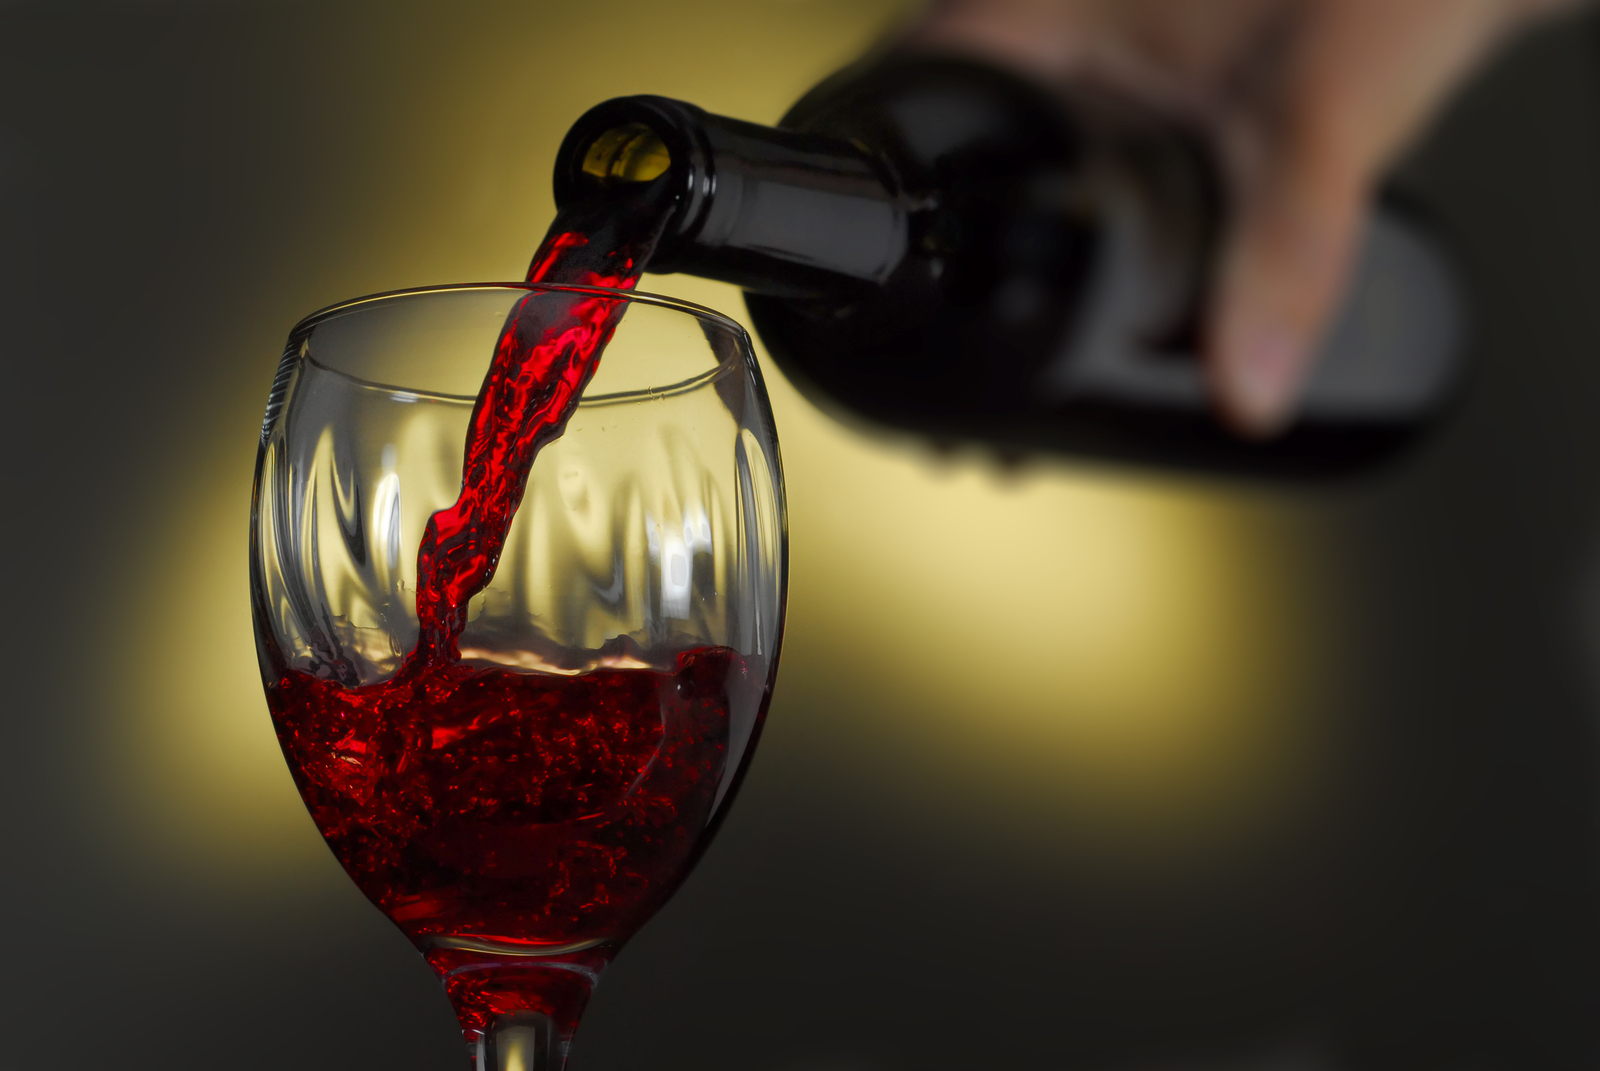 Картинка пить вино. Красное вино. Бокал красного вина. Бокал с вином. Наливает вино.